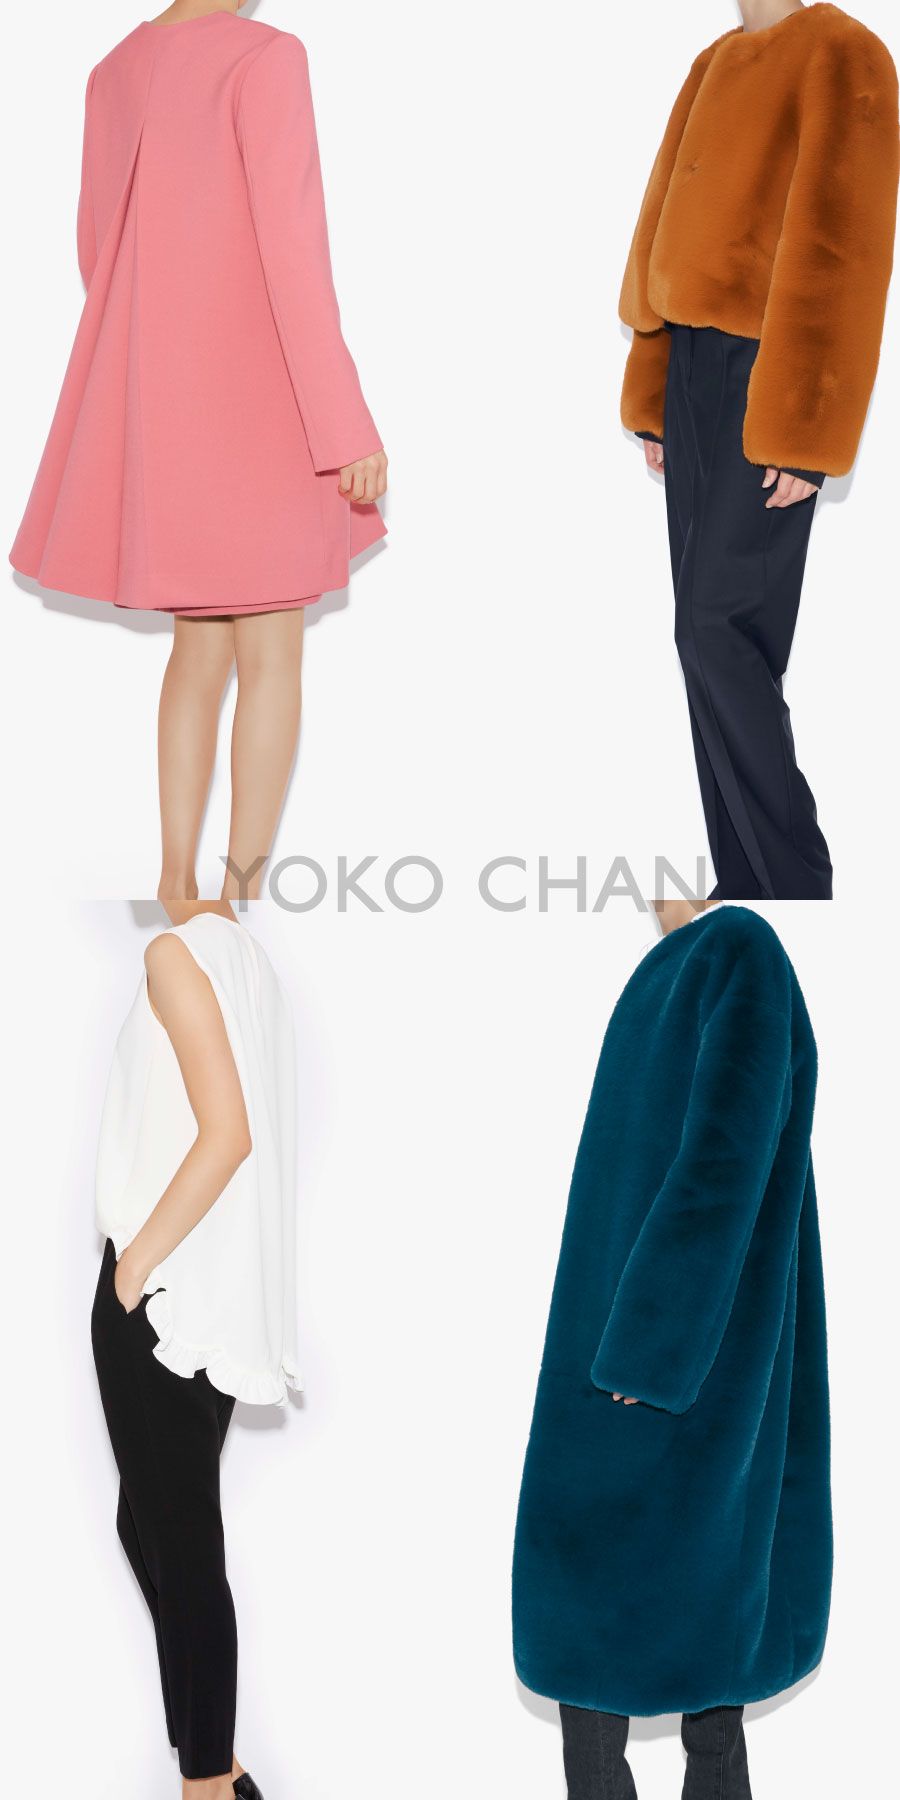 YOKO CHAN(ヨーコチャン)高価買取 | 東京の最新相場で売るならラクール